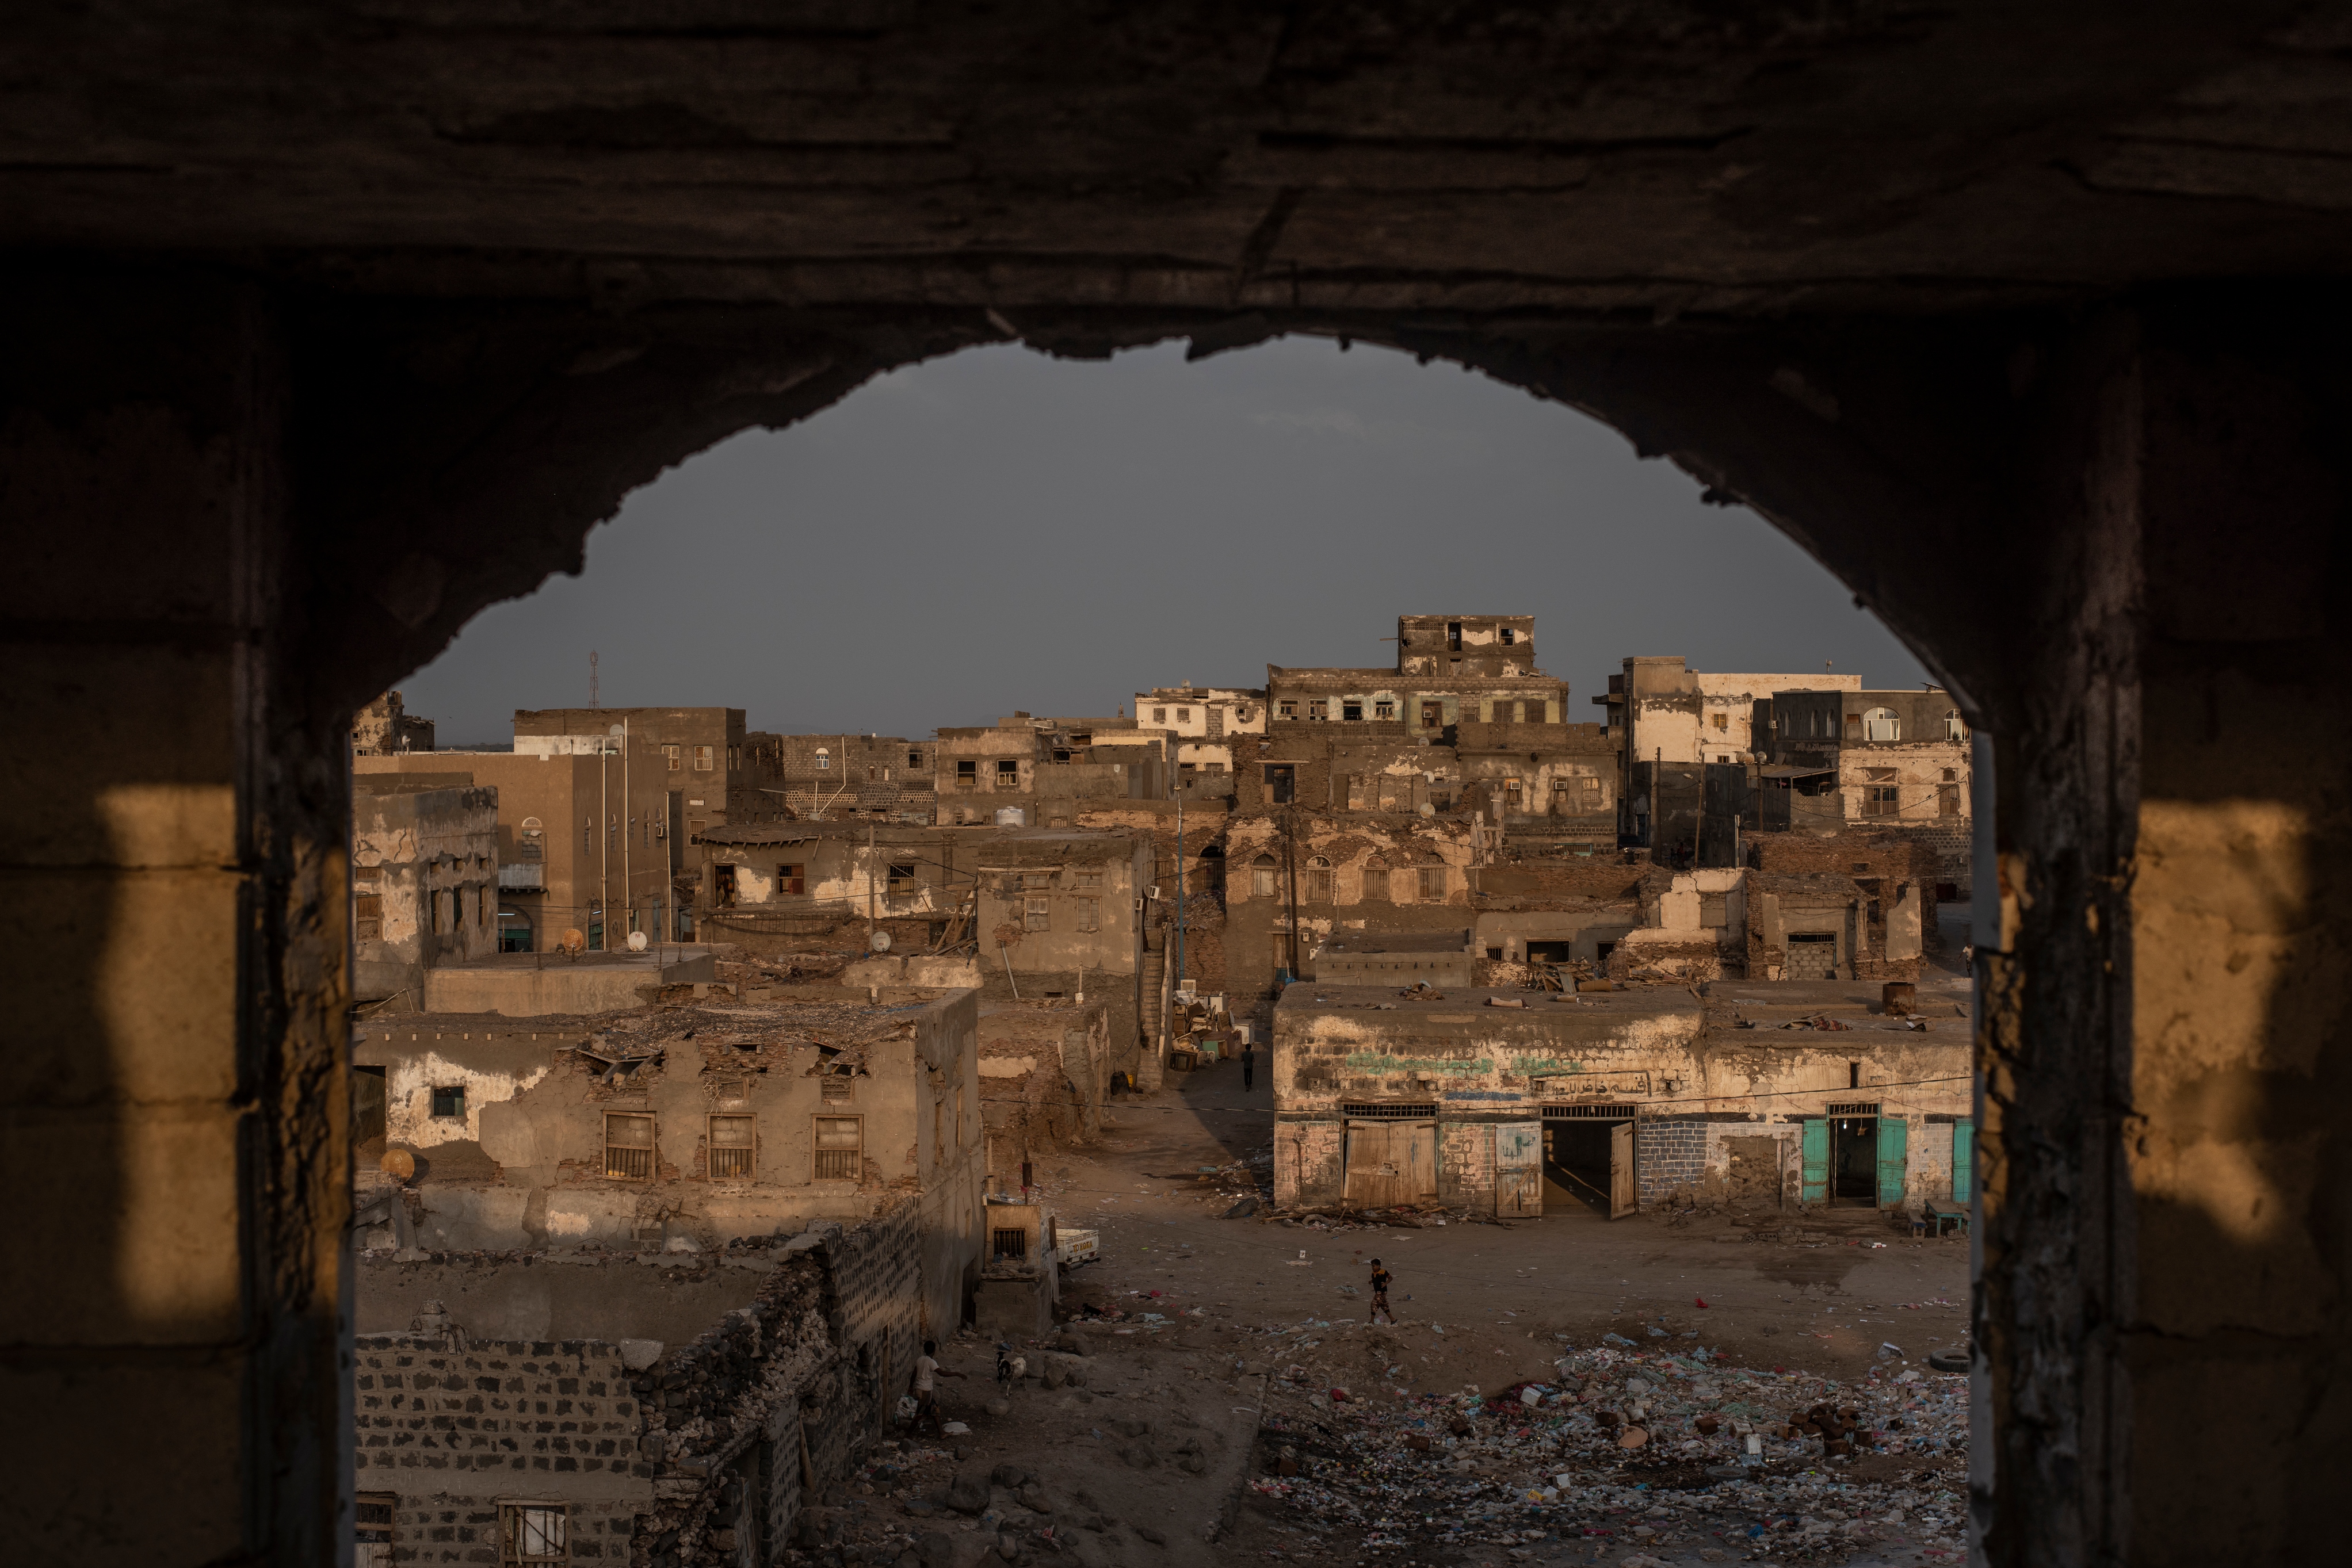 Buildings lay in ruins on Sept. 22, 2018 in Mocha, Yemen.